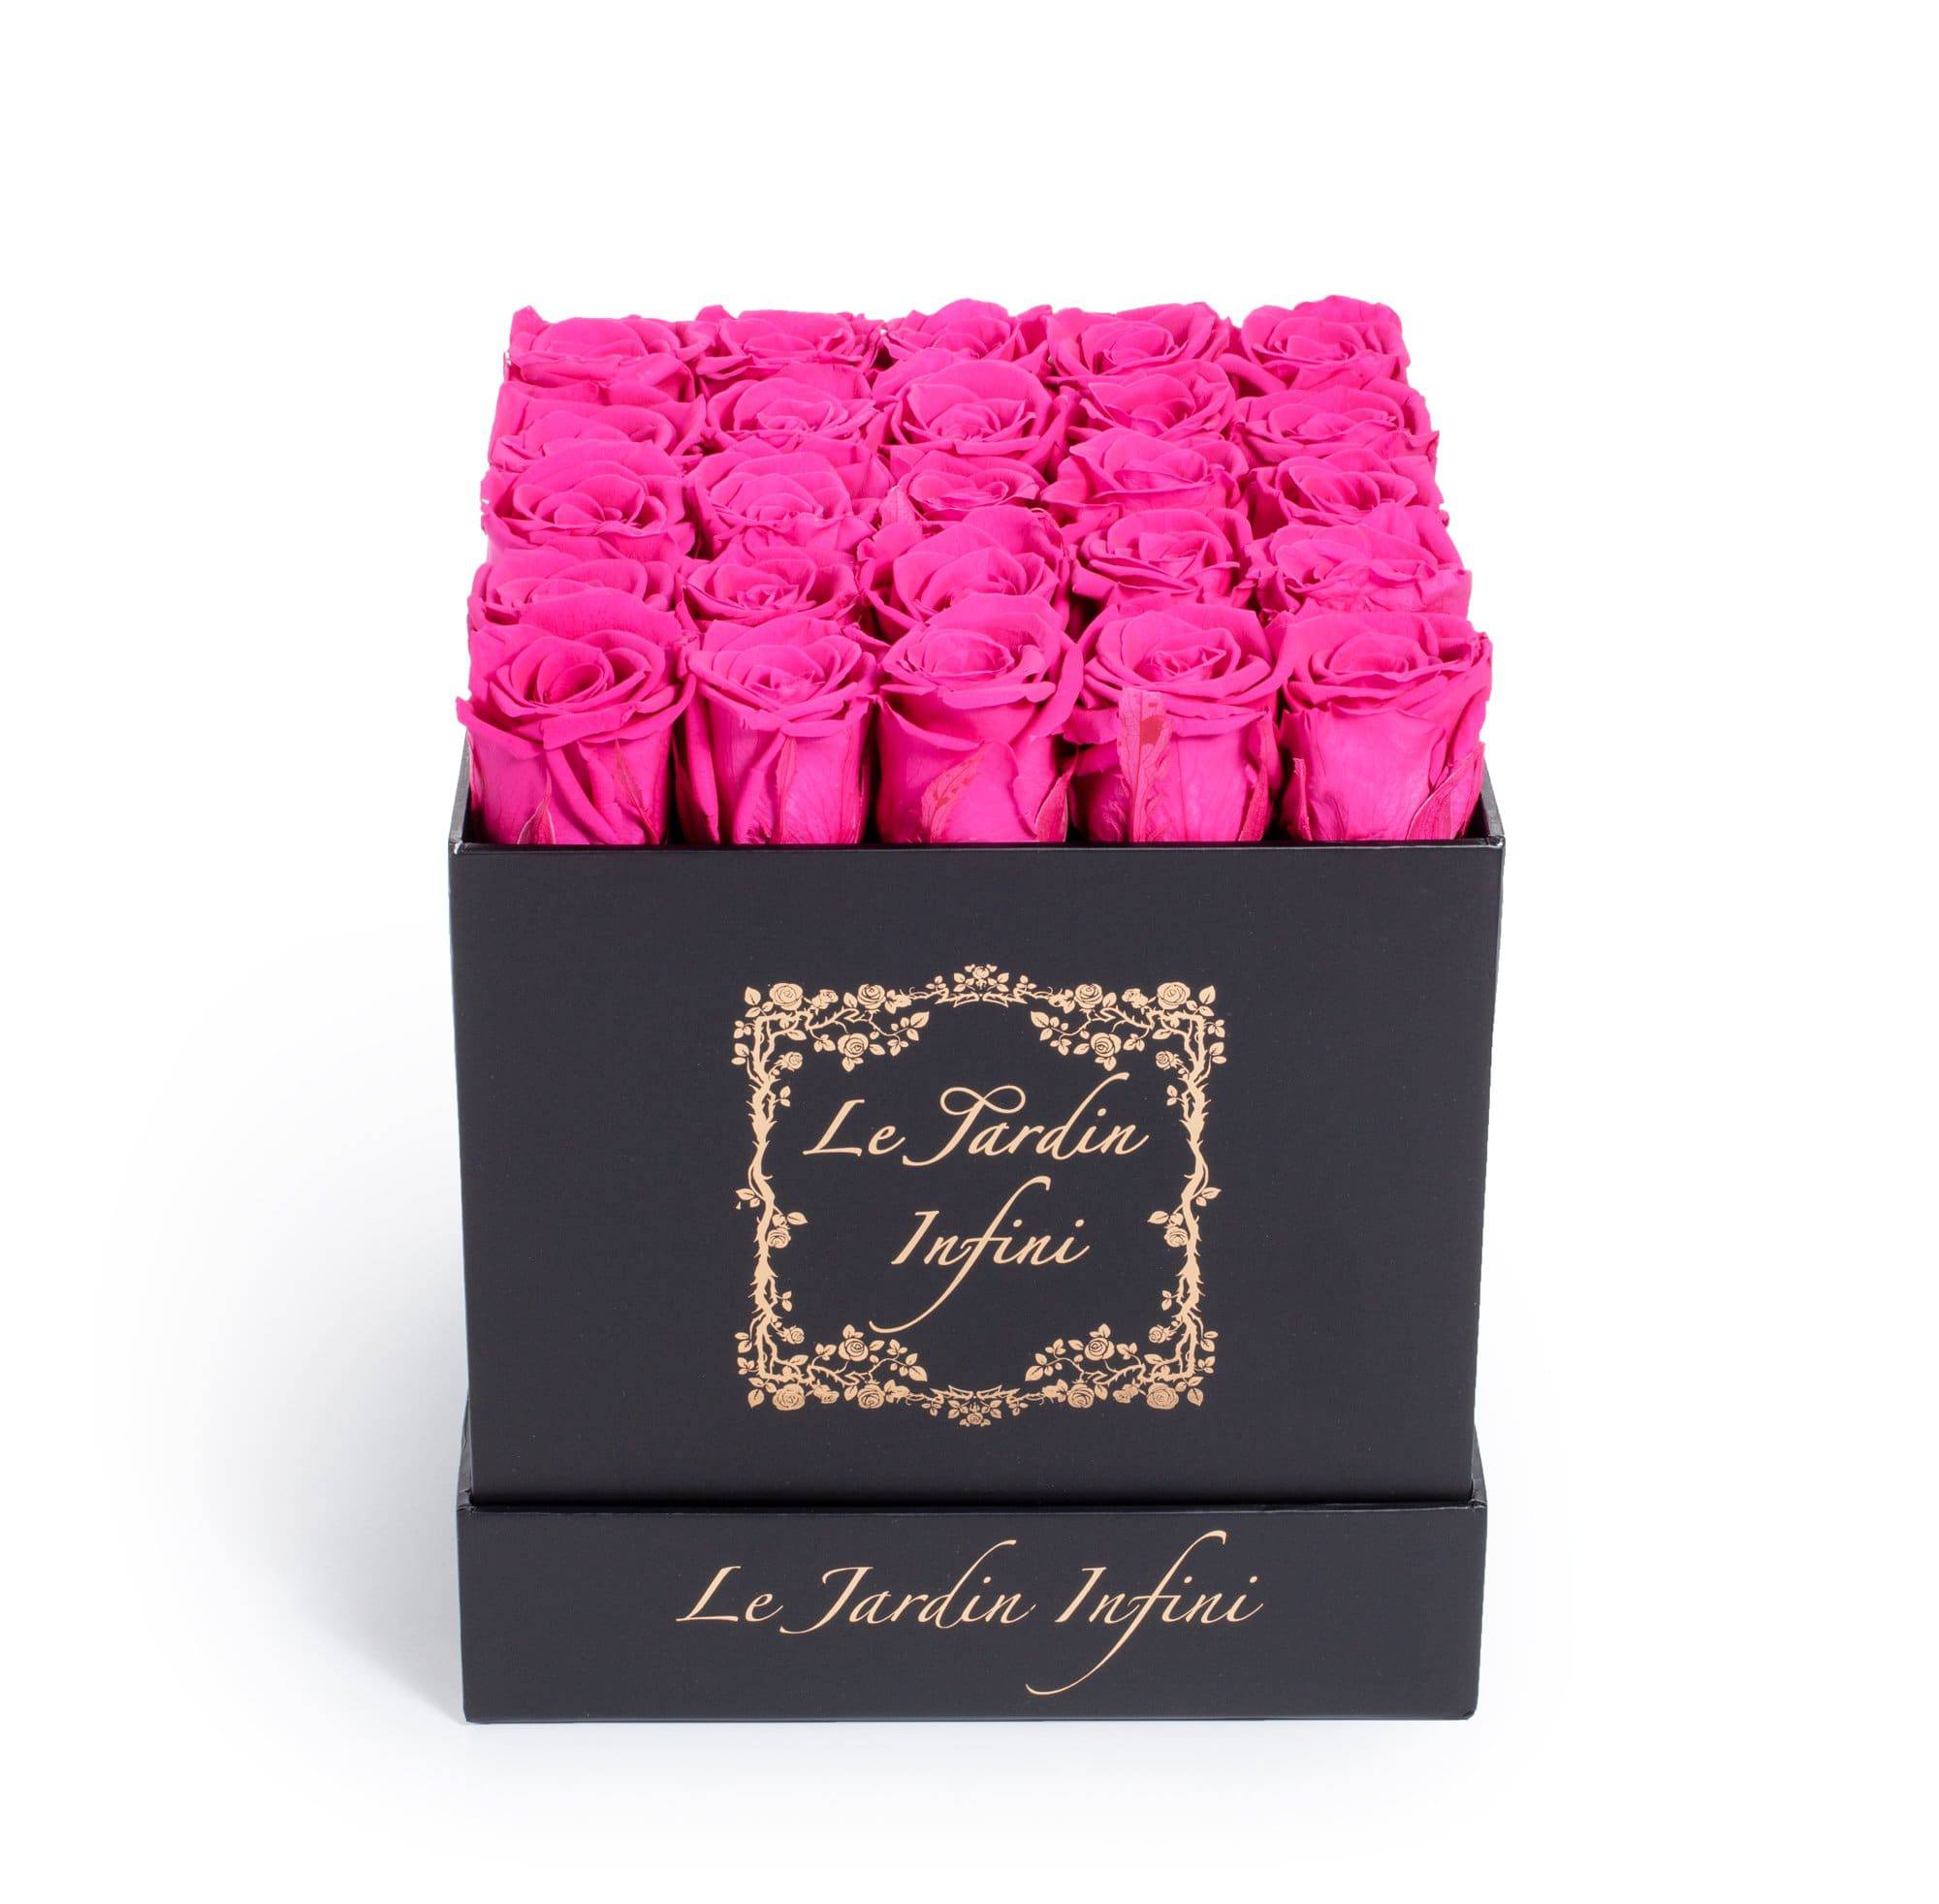 Hot Pink Preserved Roses - Medium Square Black Box